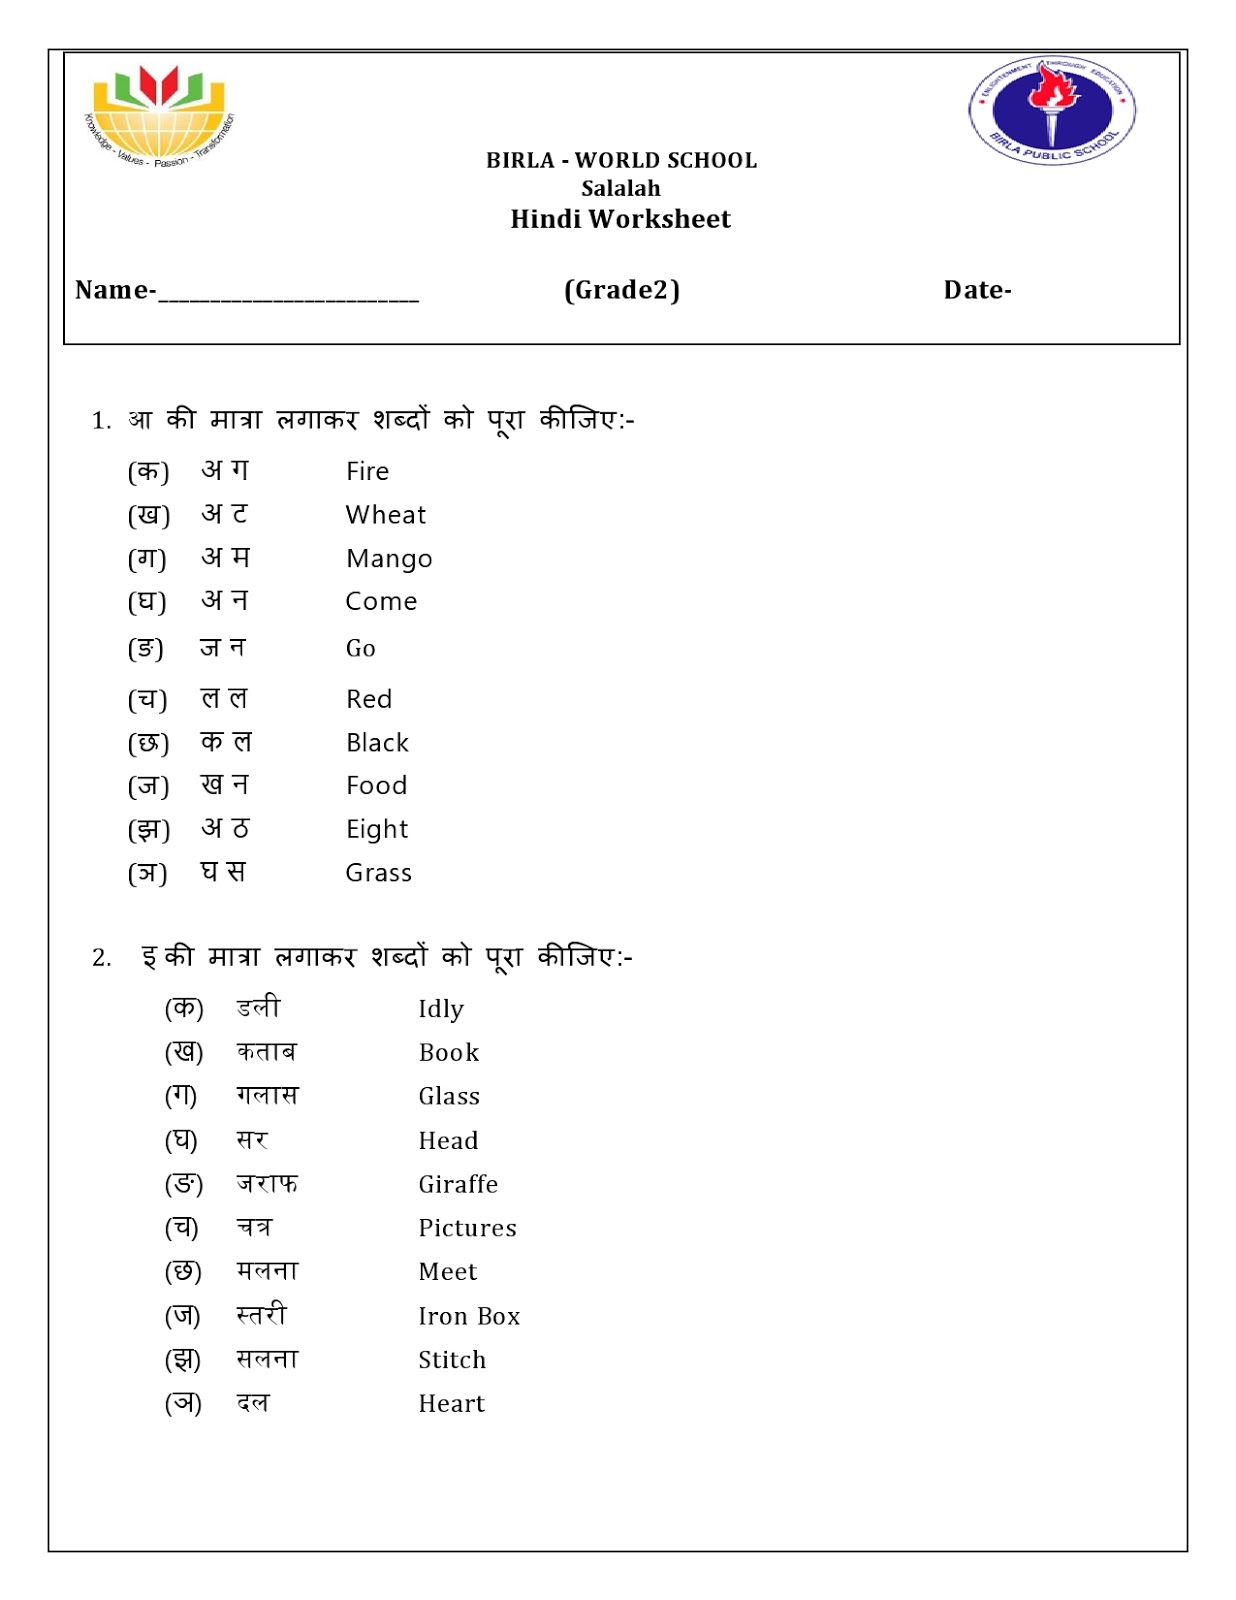 I Ki Matra Hindi Workbook For Grade 1 Estudynotes Free Printable 